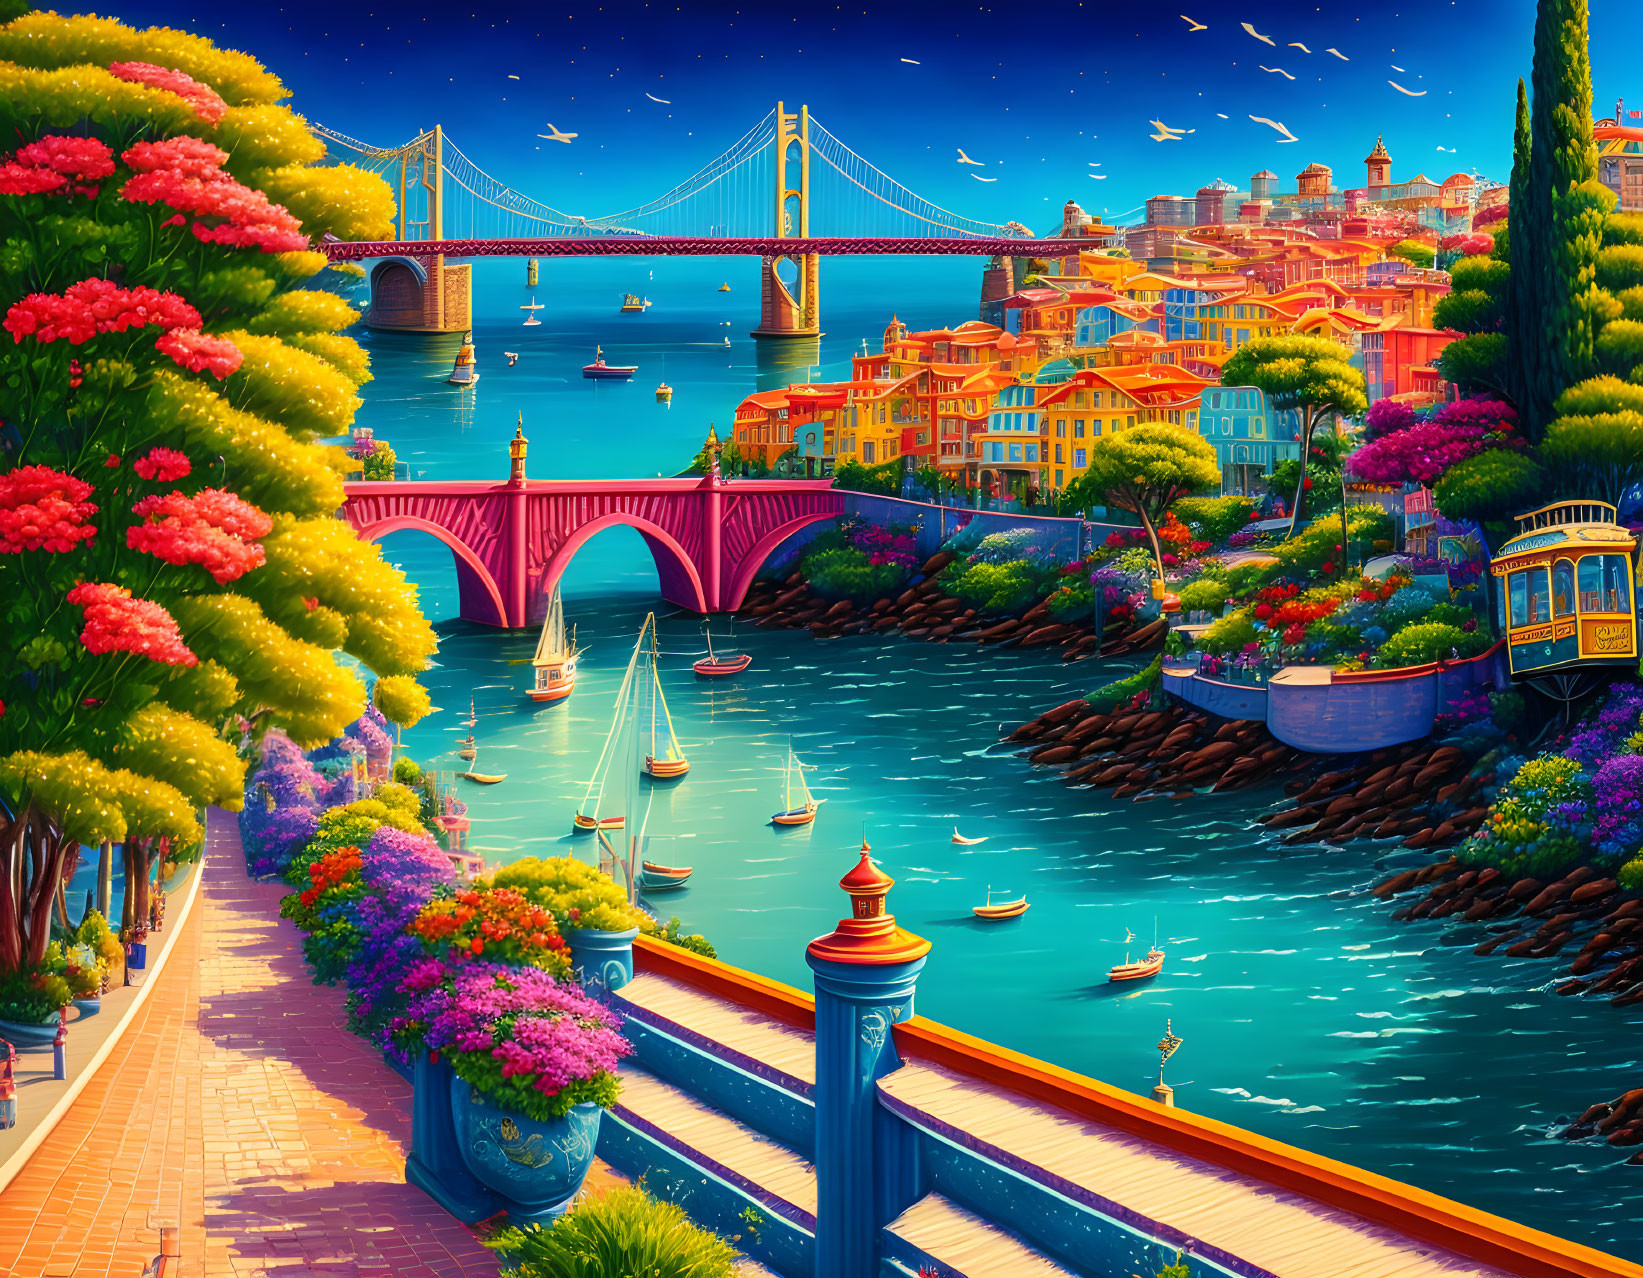 Colorful coastal scene with promenade, bridges, cable car, boats, and cityscape at dusk